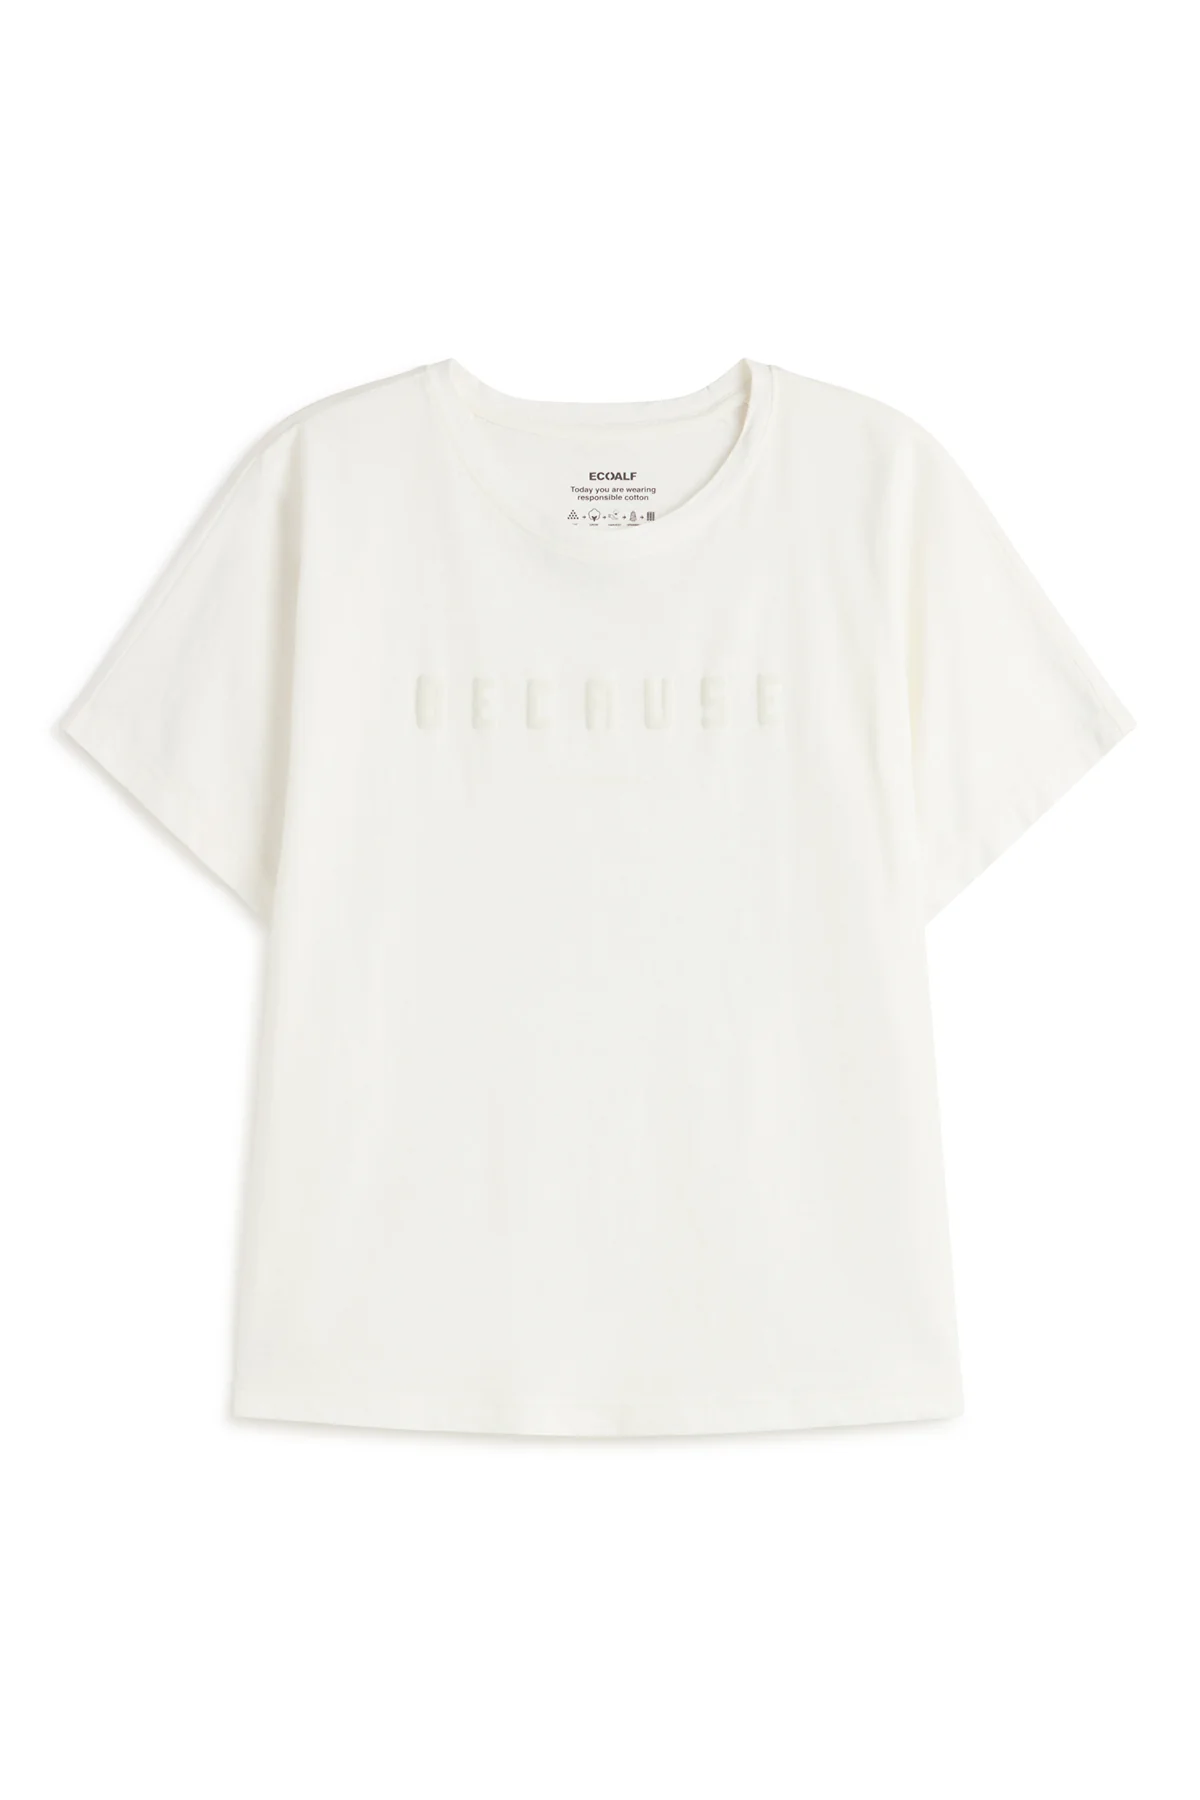 ECOALF camiseta manga corta color blanco "because" - 5